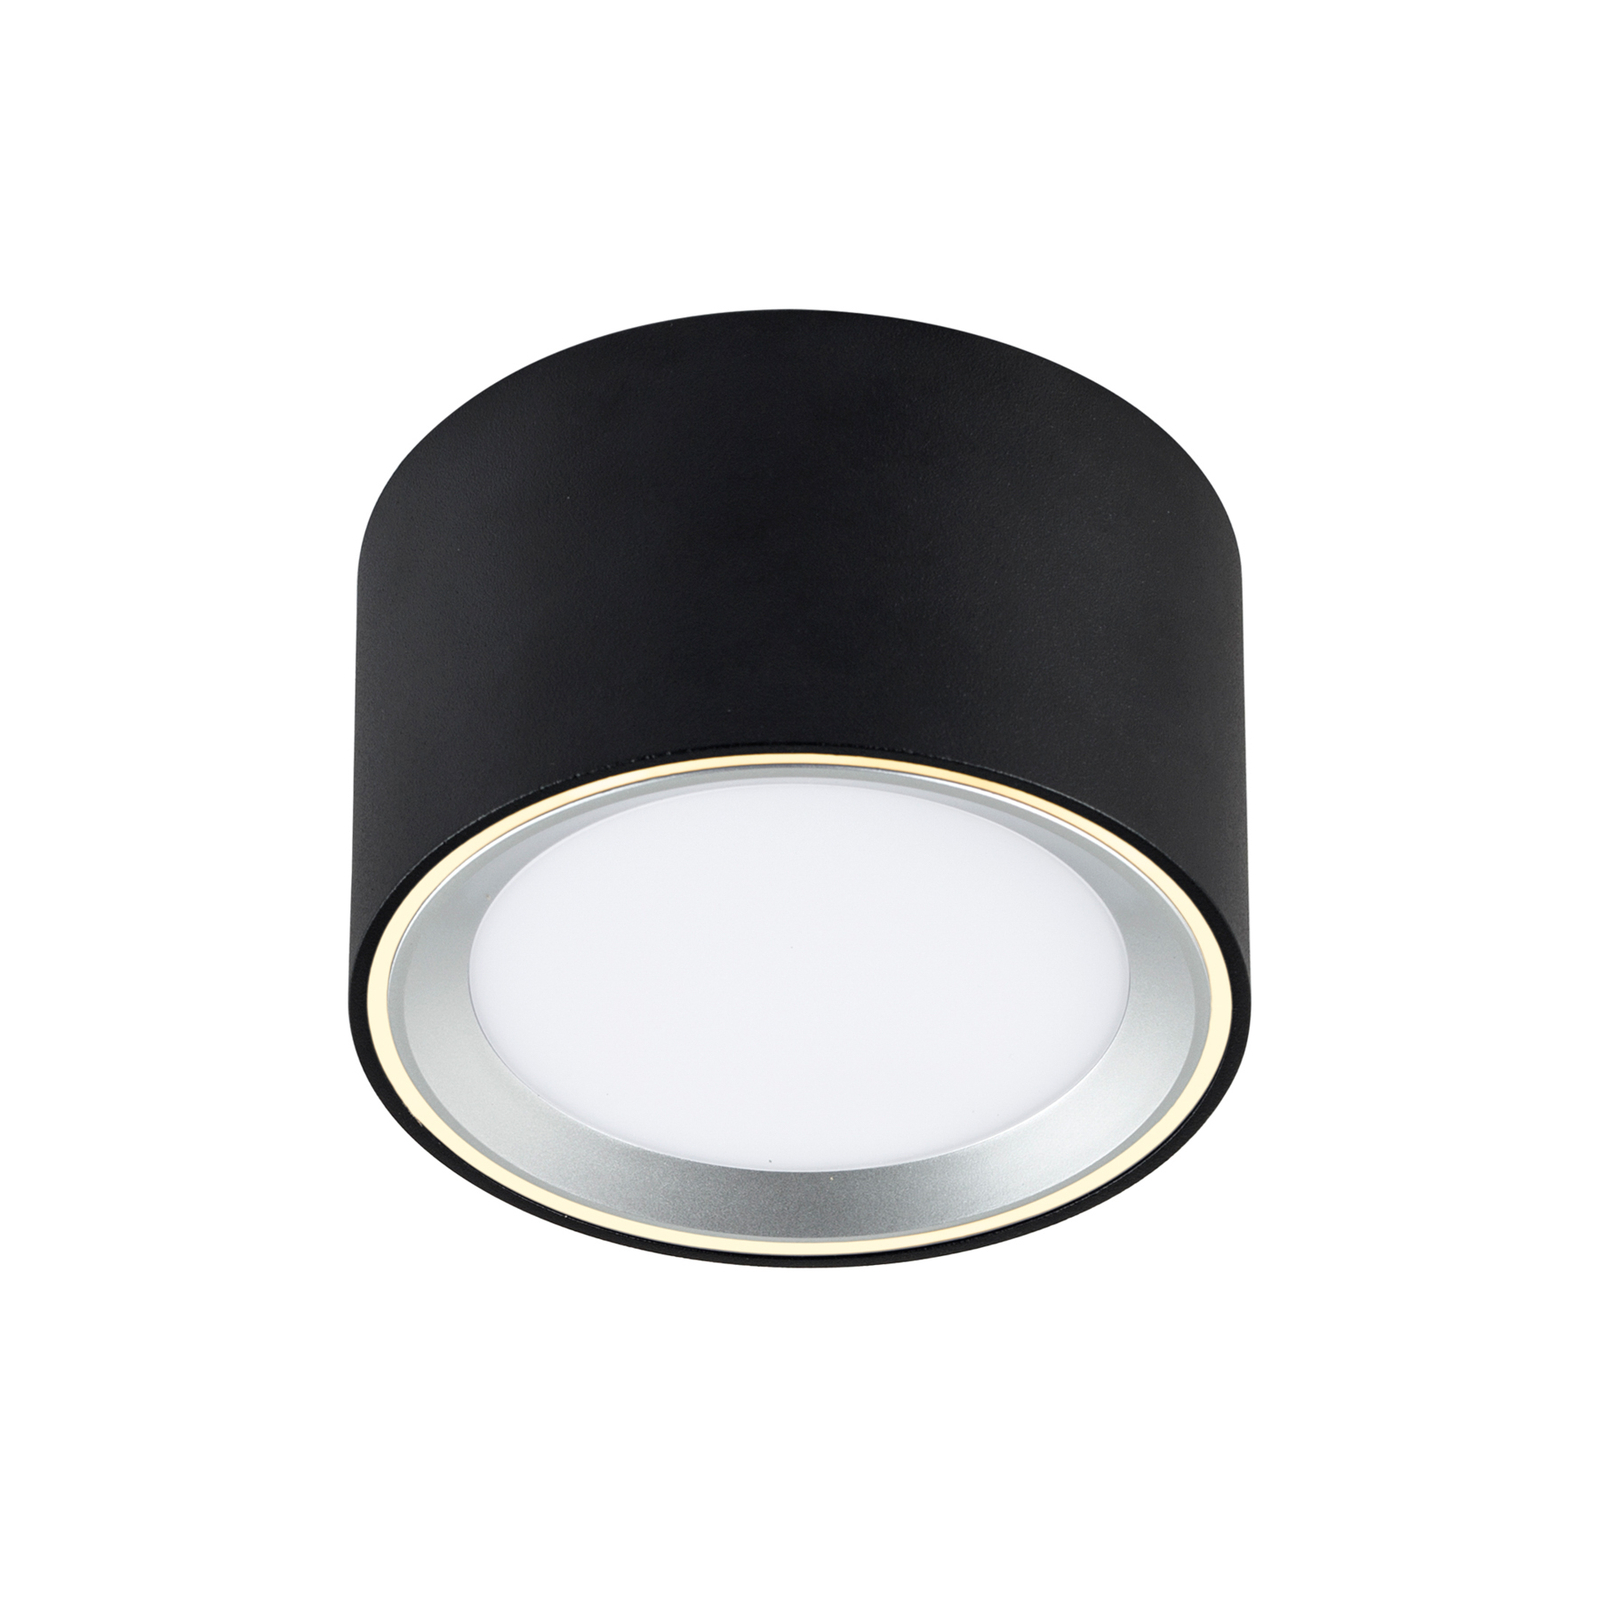 Downlight LED Fallon 3-step-dim, nero/acciaio